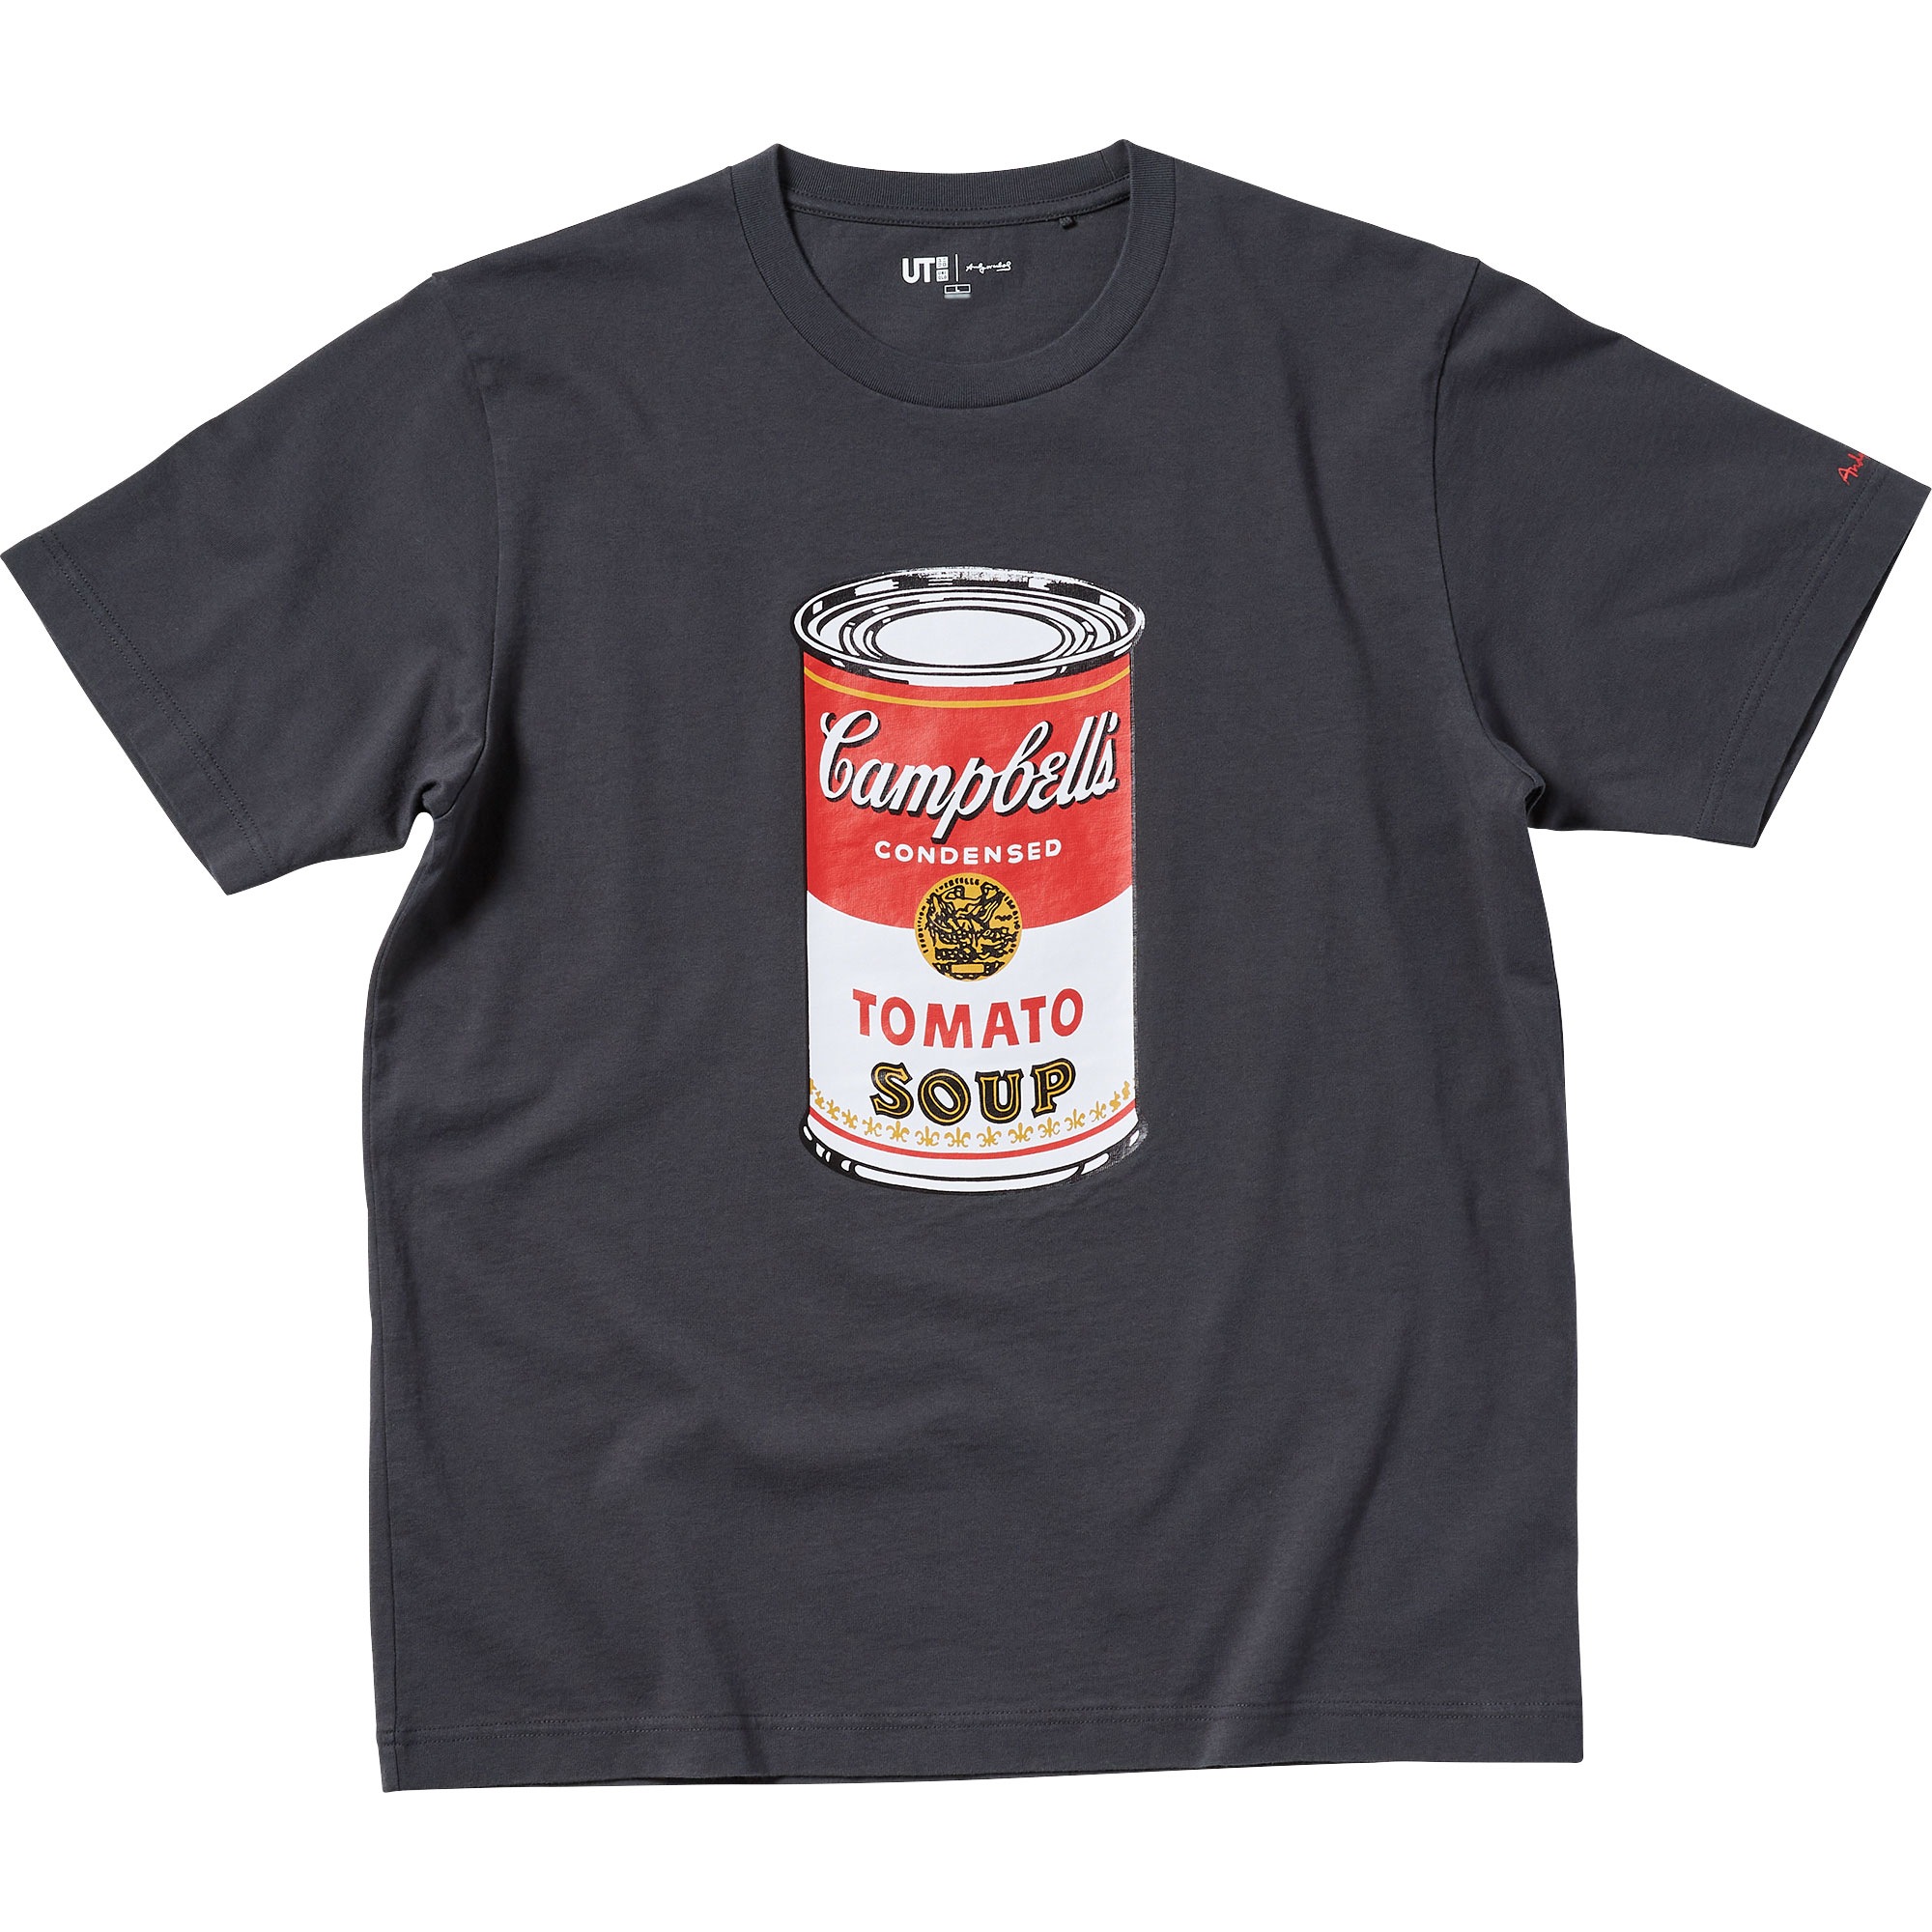 Uniqlo, Andy Warhol, T-shirt